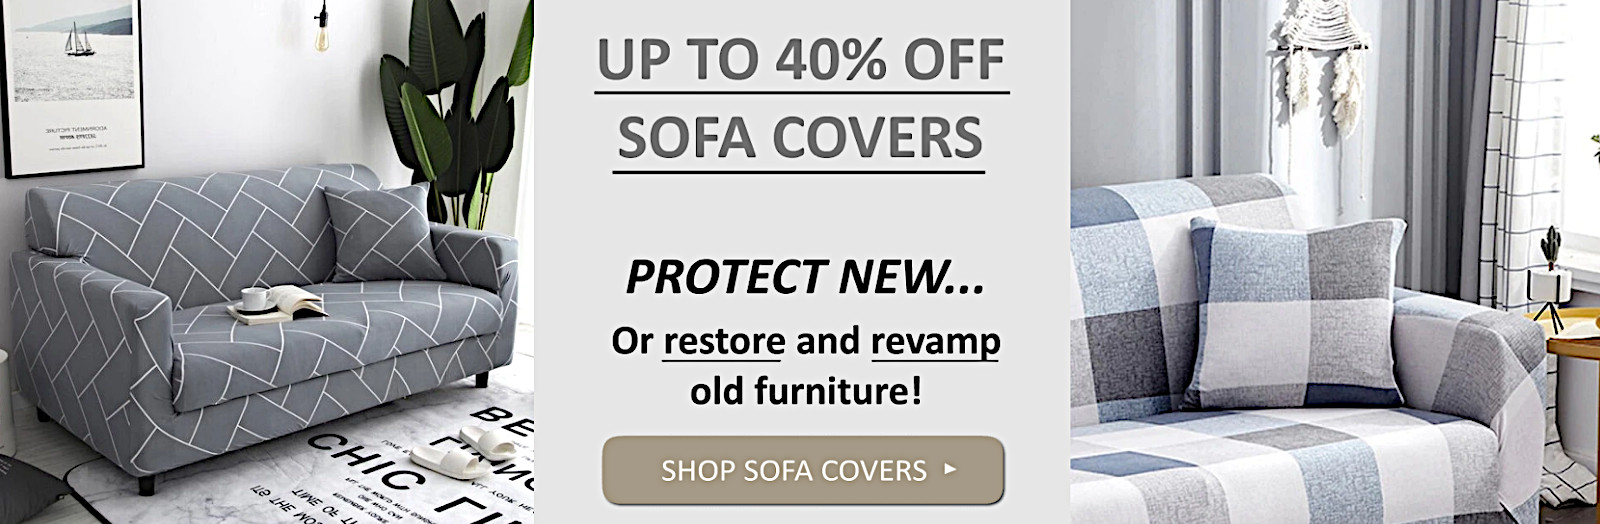 Good Buy sofa covers